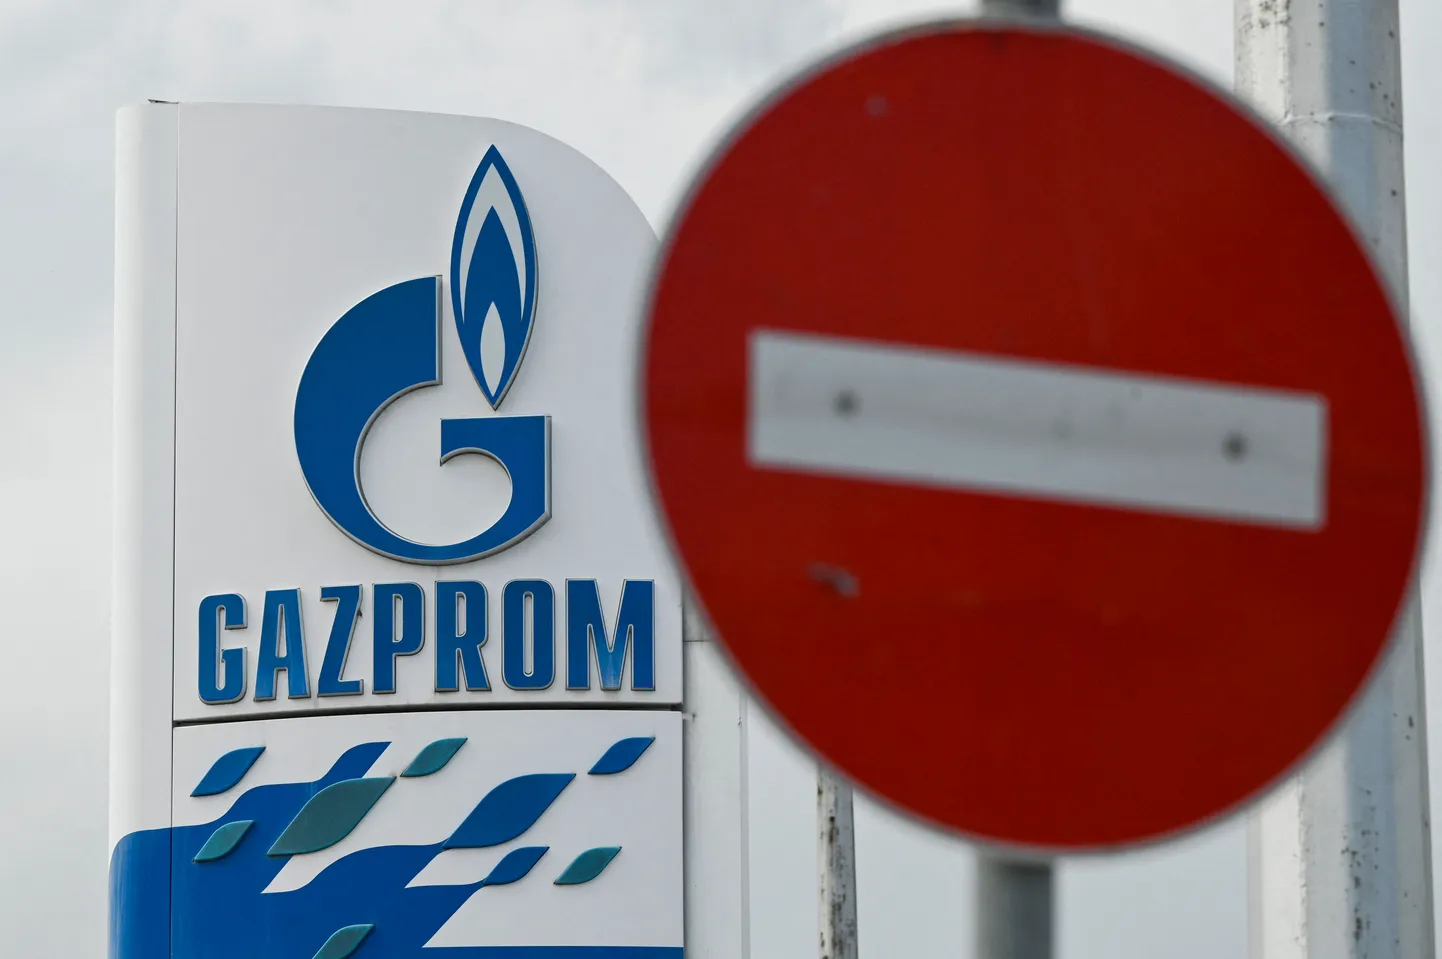 Gazpromi logo. Pilt on illustratiivne.